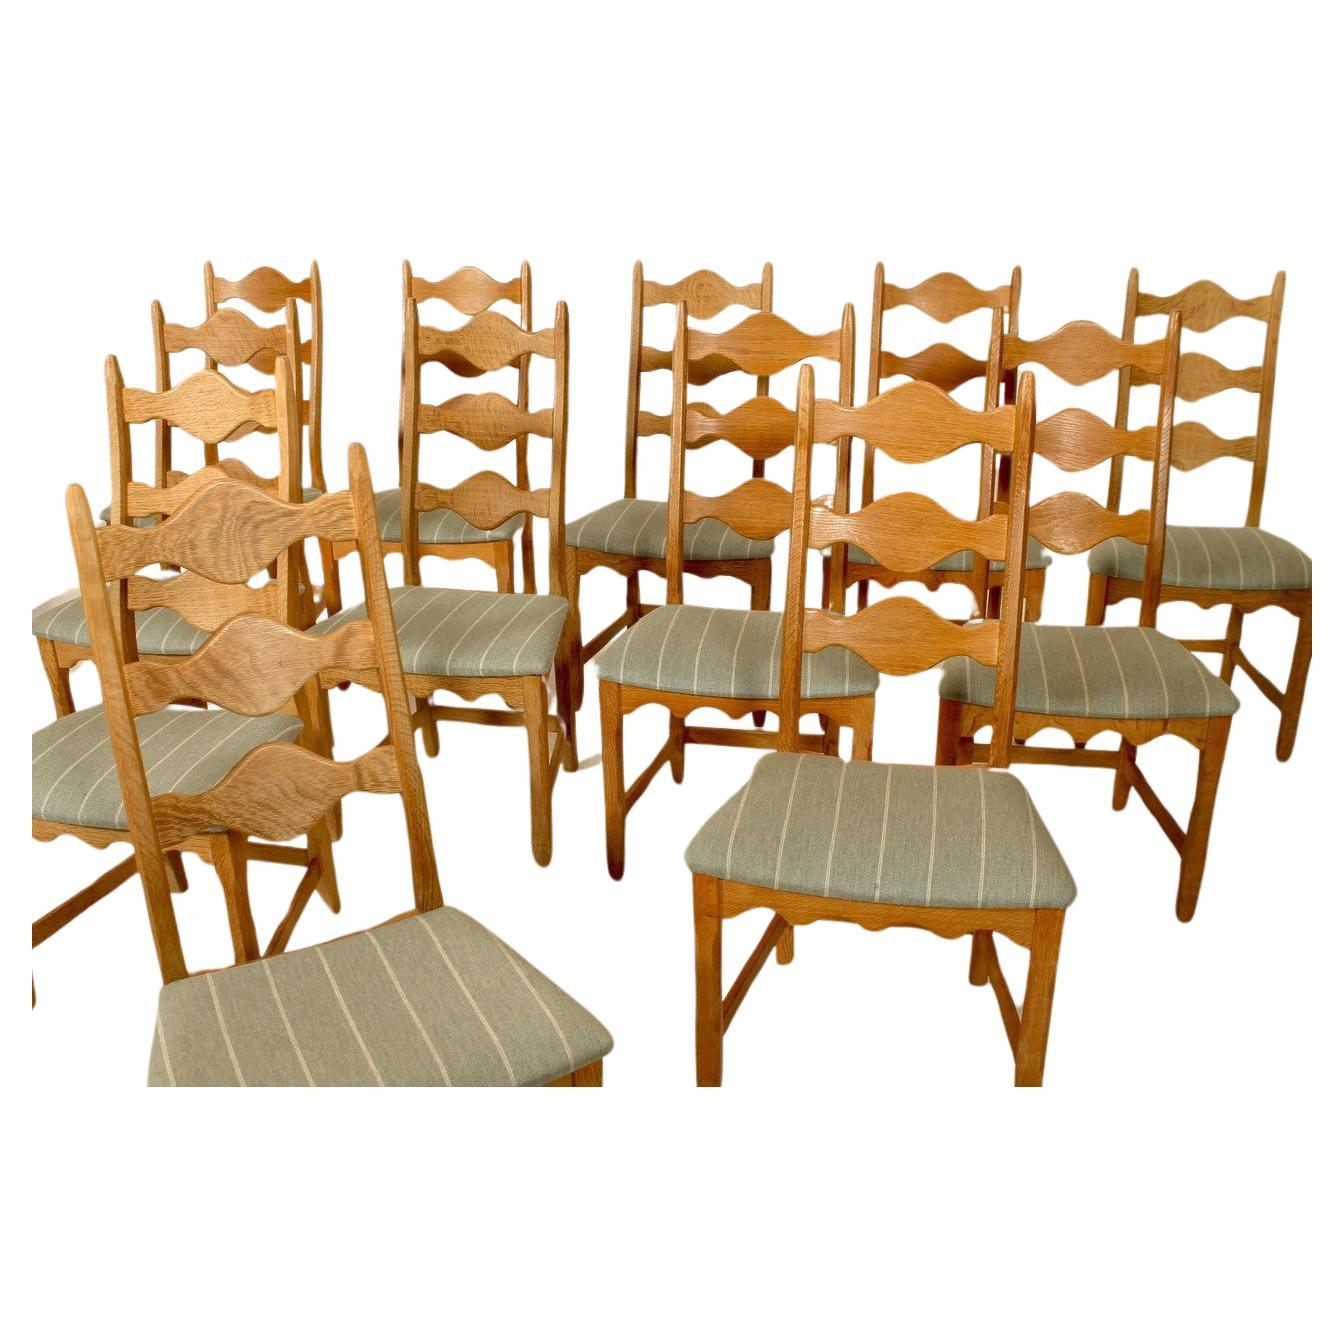 HENNING KJÆRNULF - CHAIR
Item Number: 14505
DESIGNER: Henning Kjærnulf
MANUFACTURER: Nyrup Møbelfabrik
MATERIALS: Oak
CONDITION: Good original condition
DIMENSIONS: W. 52 cm. H. 103 cm. D. 44 cm.

REMARKS:
Large set of 12 high back dining chairs in